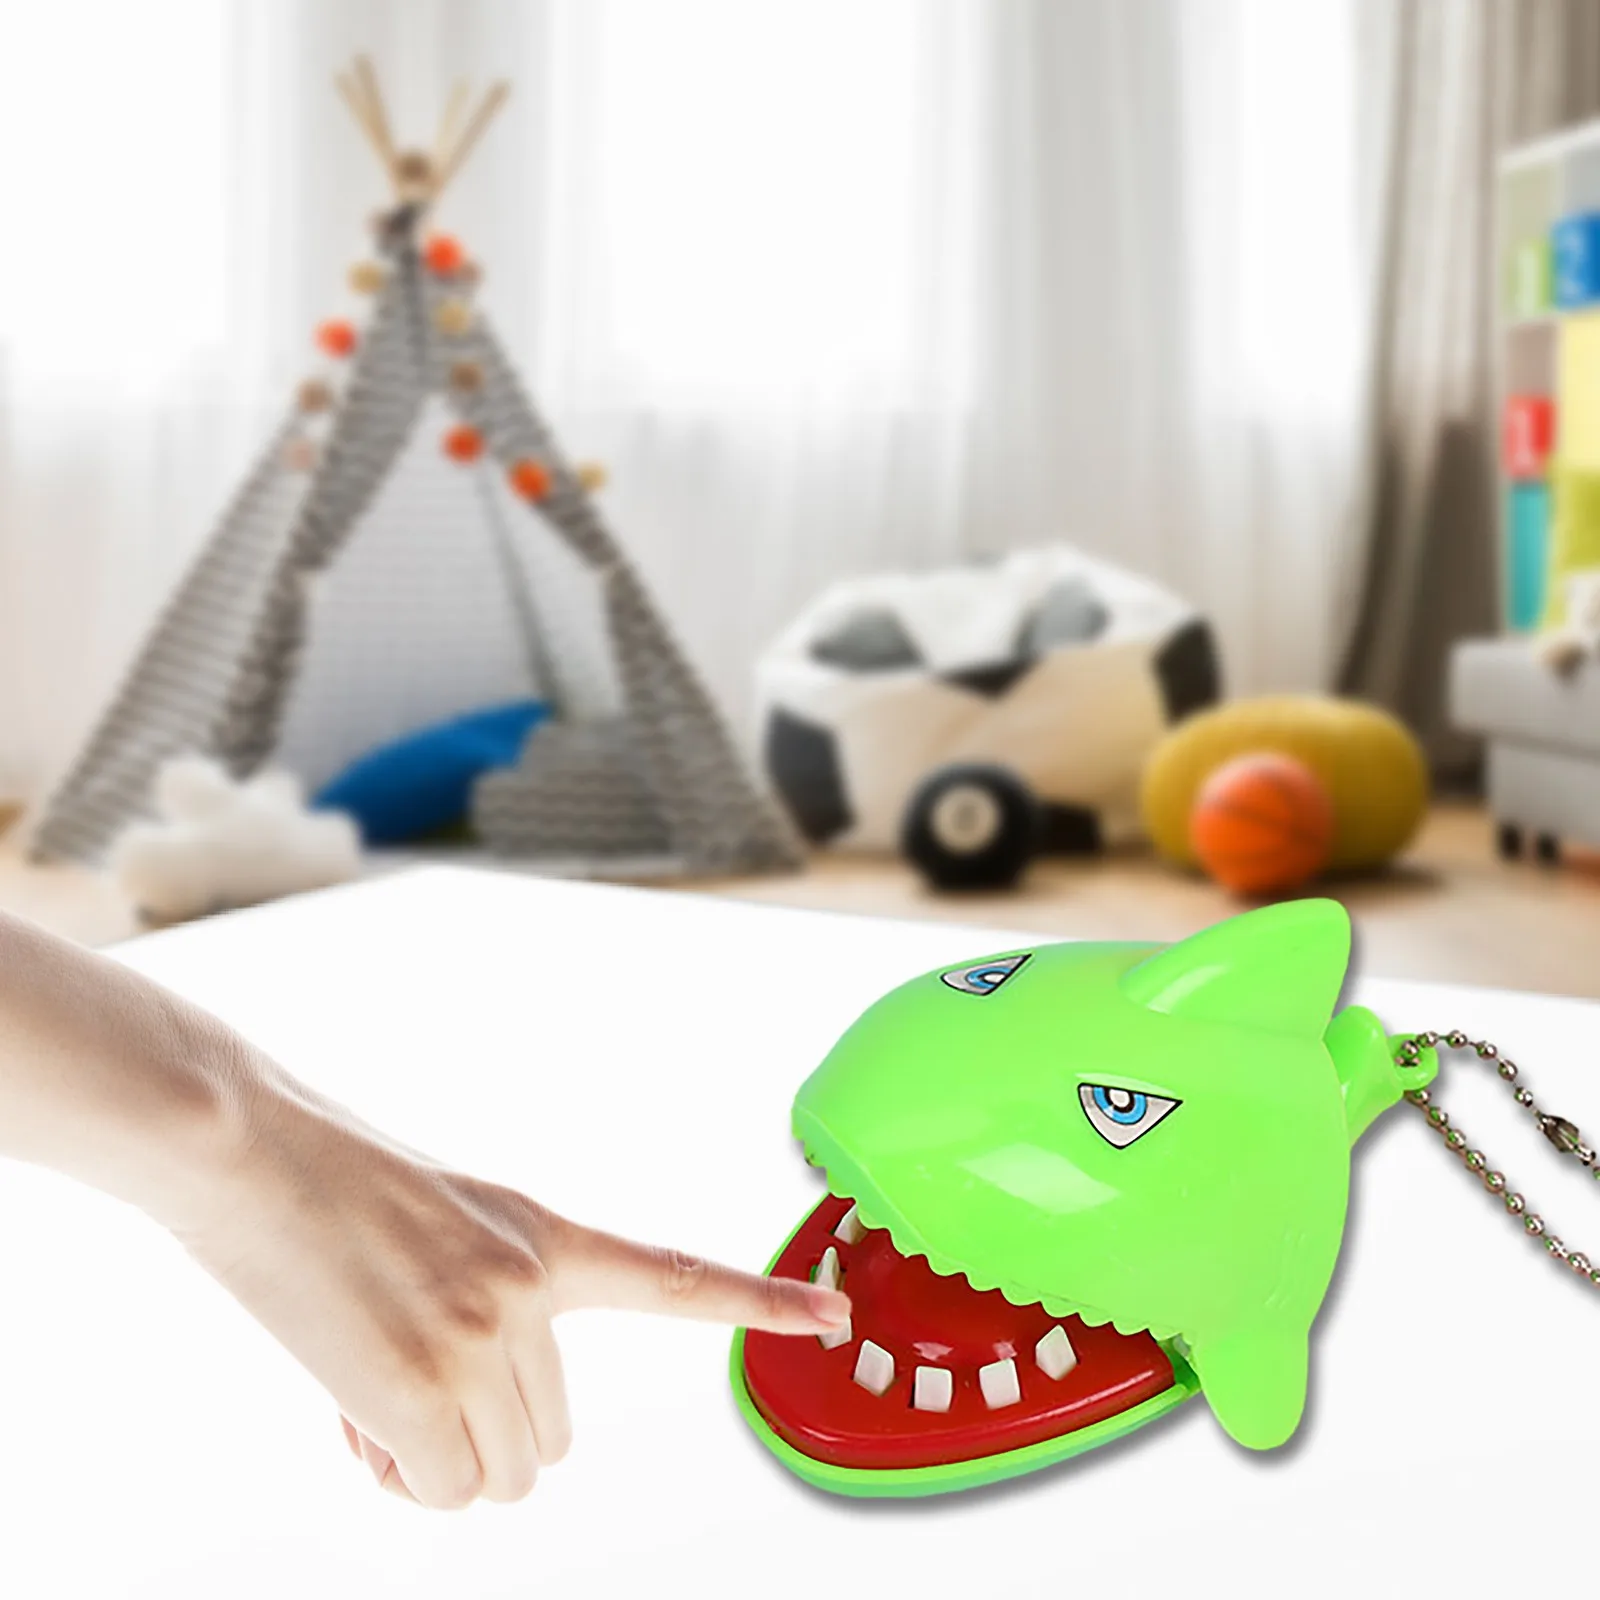 

2021 Novelty Practical Toy Large Crocodile Mouth Dentist Biting Finger Jokes Toys Funny Family Games Gift For Children Cheaper